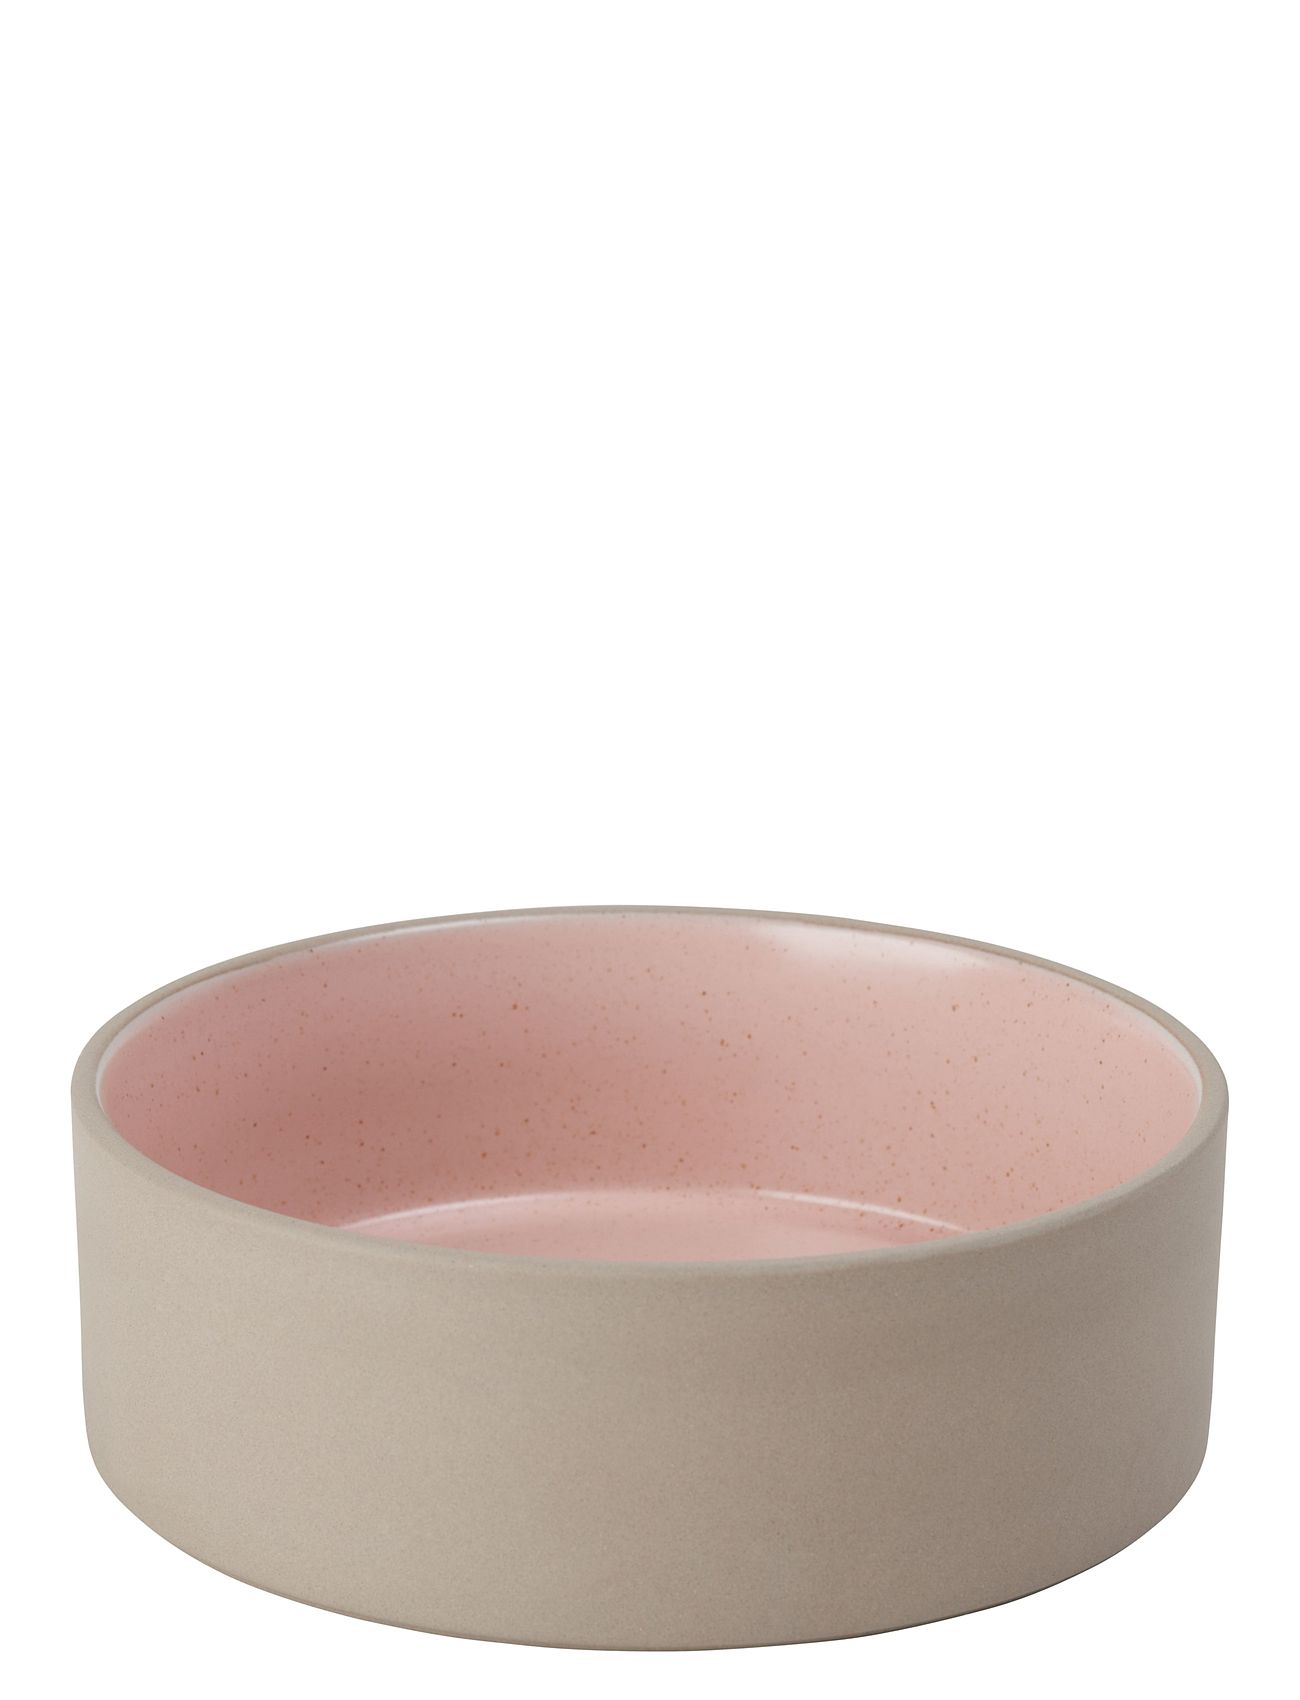 Sia Dog Bowl Home Pets Food Bowls Pink OYOY Living Design